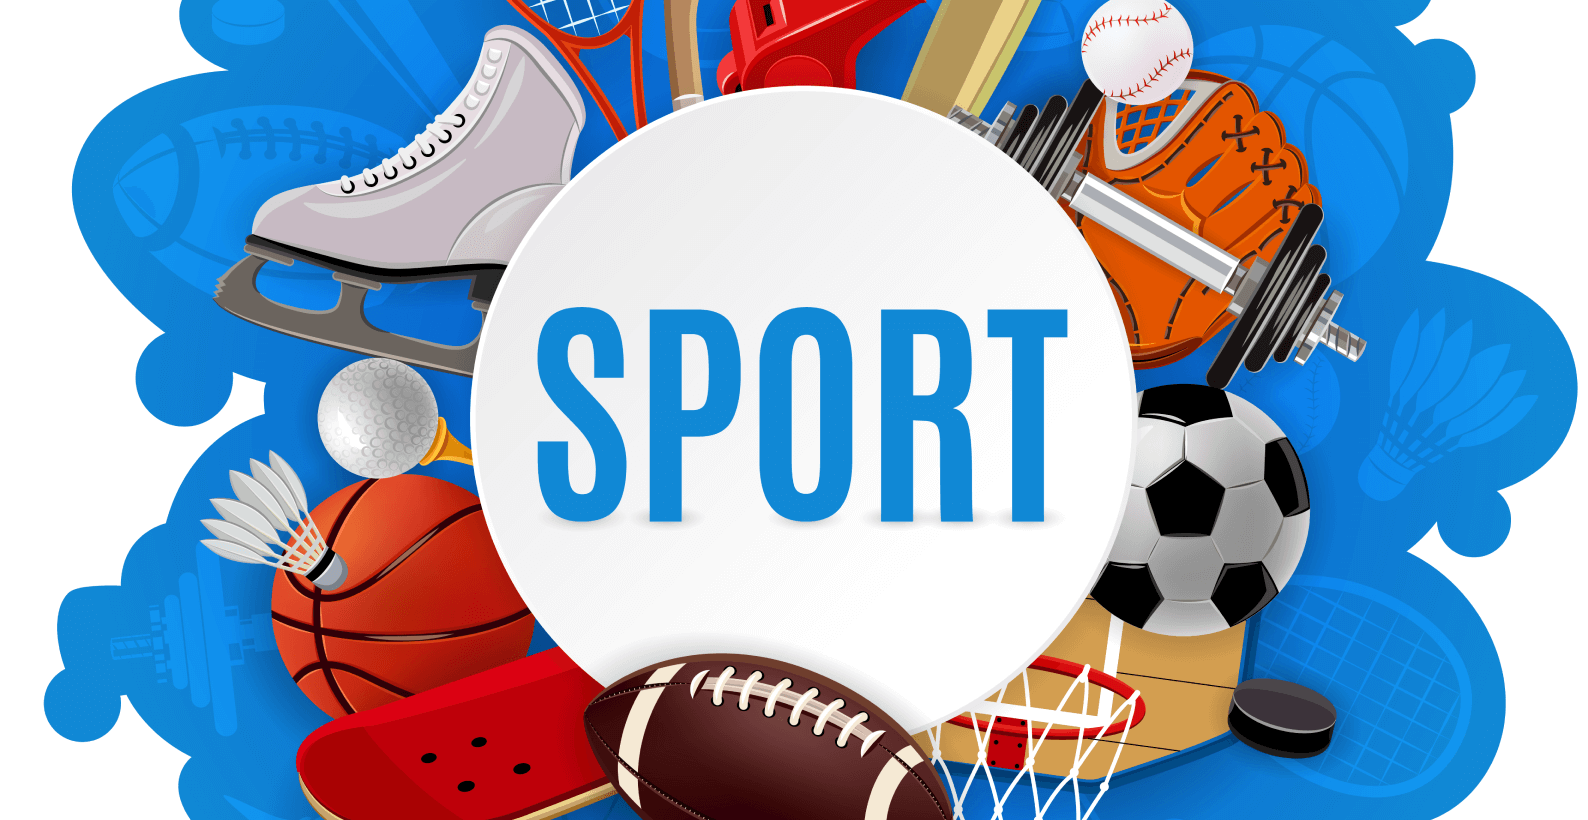 Sports Wordpress Themes